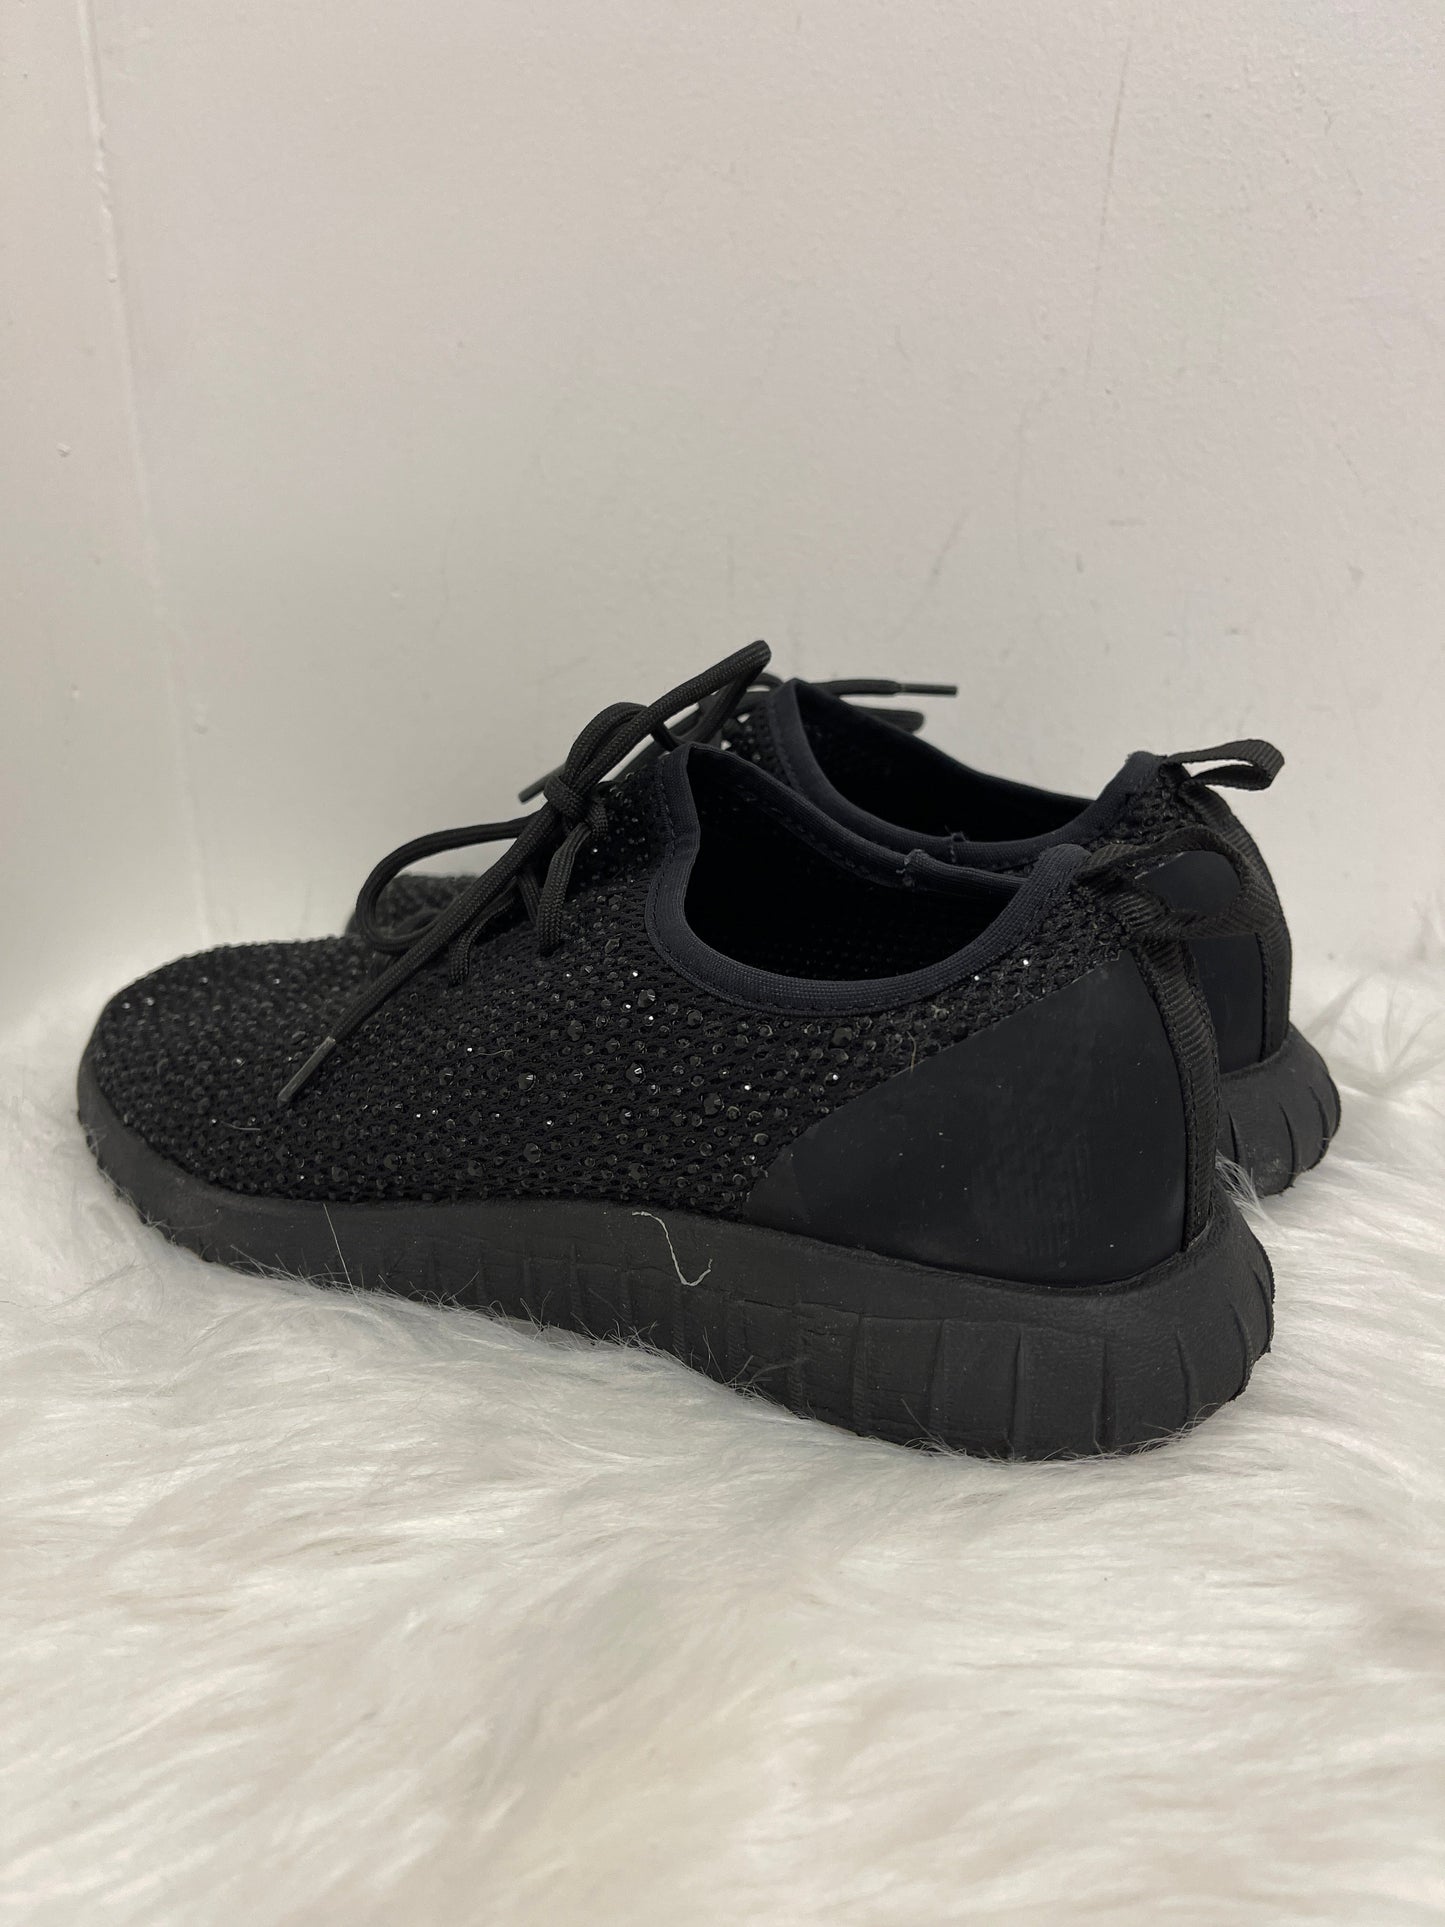 Black Shoes Sneakers Aldo, Size 8.5